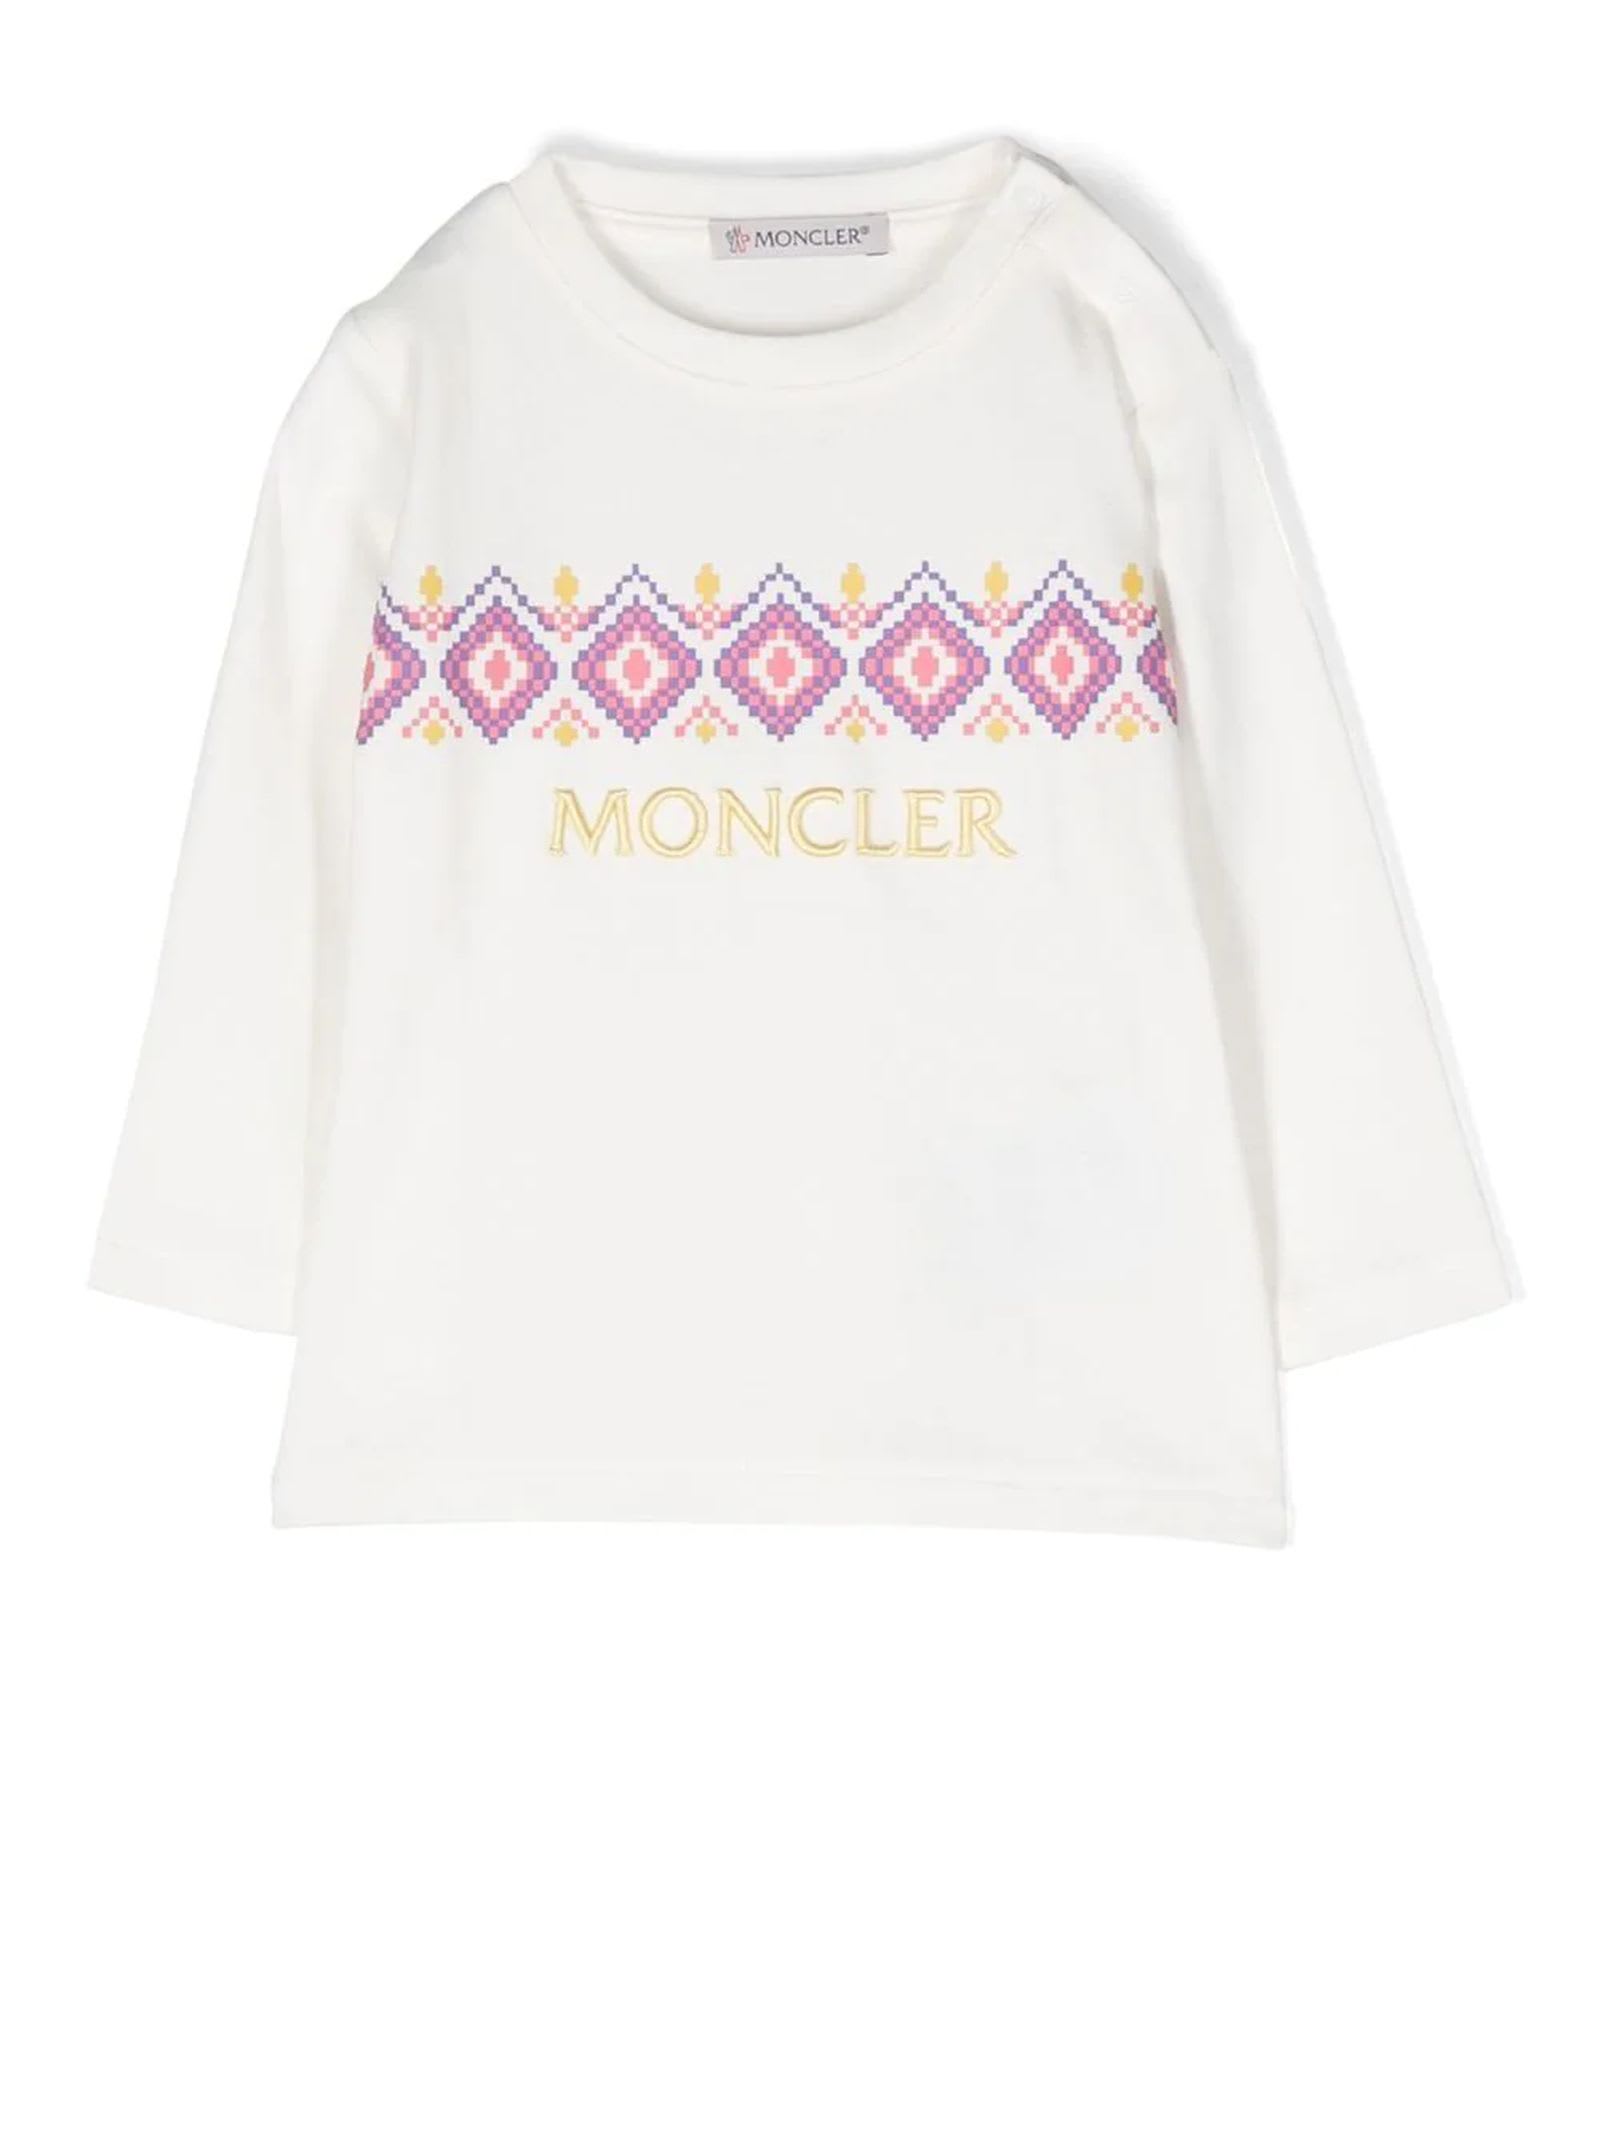 Moncler Babies' White Cotton Tshirt In Panna